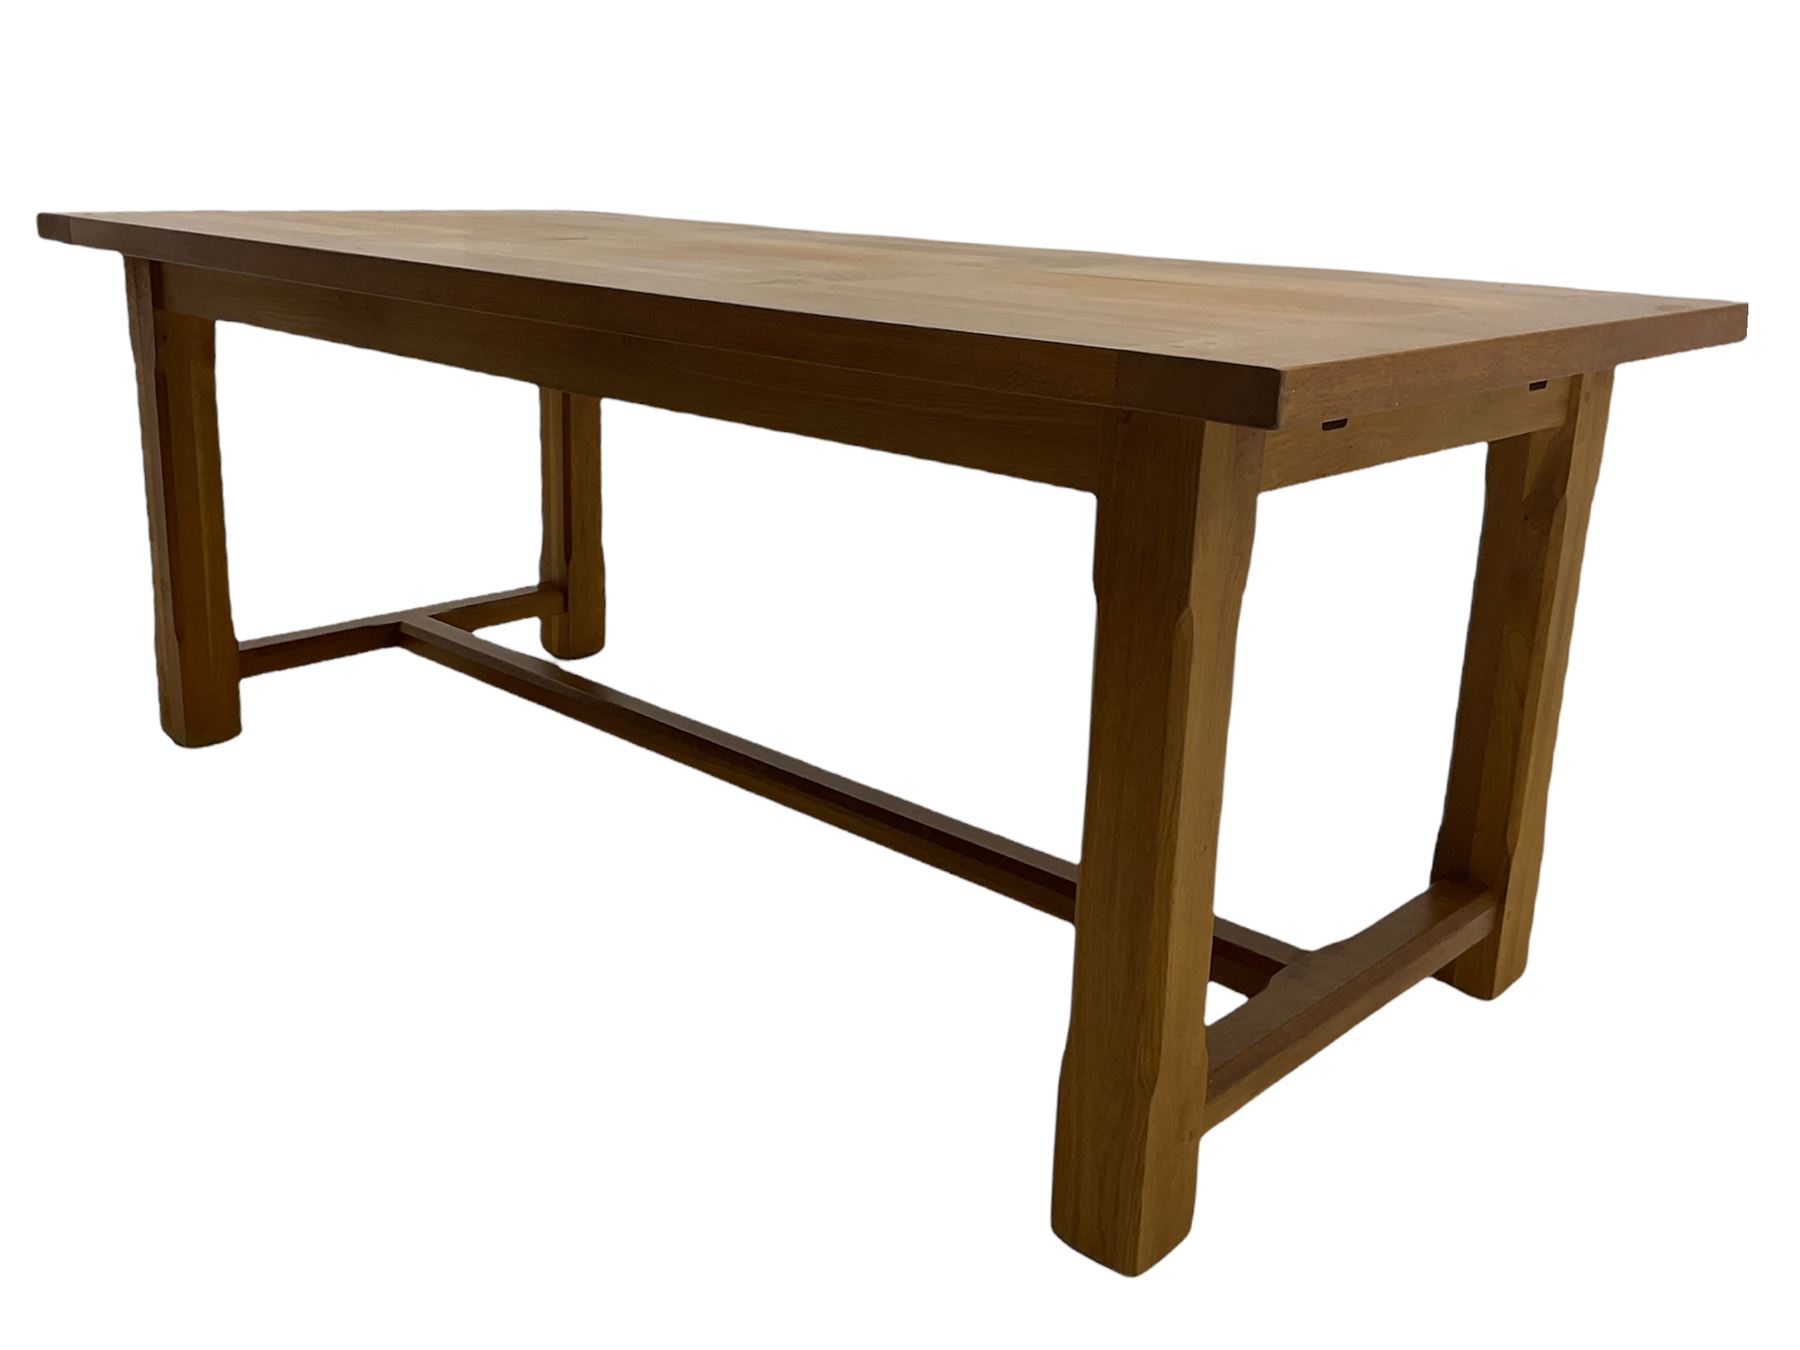 Manor Oak - light oak rectangular dining table - Image 6 of 11